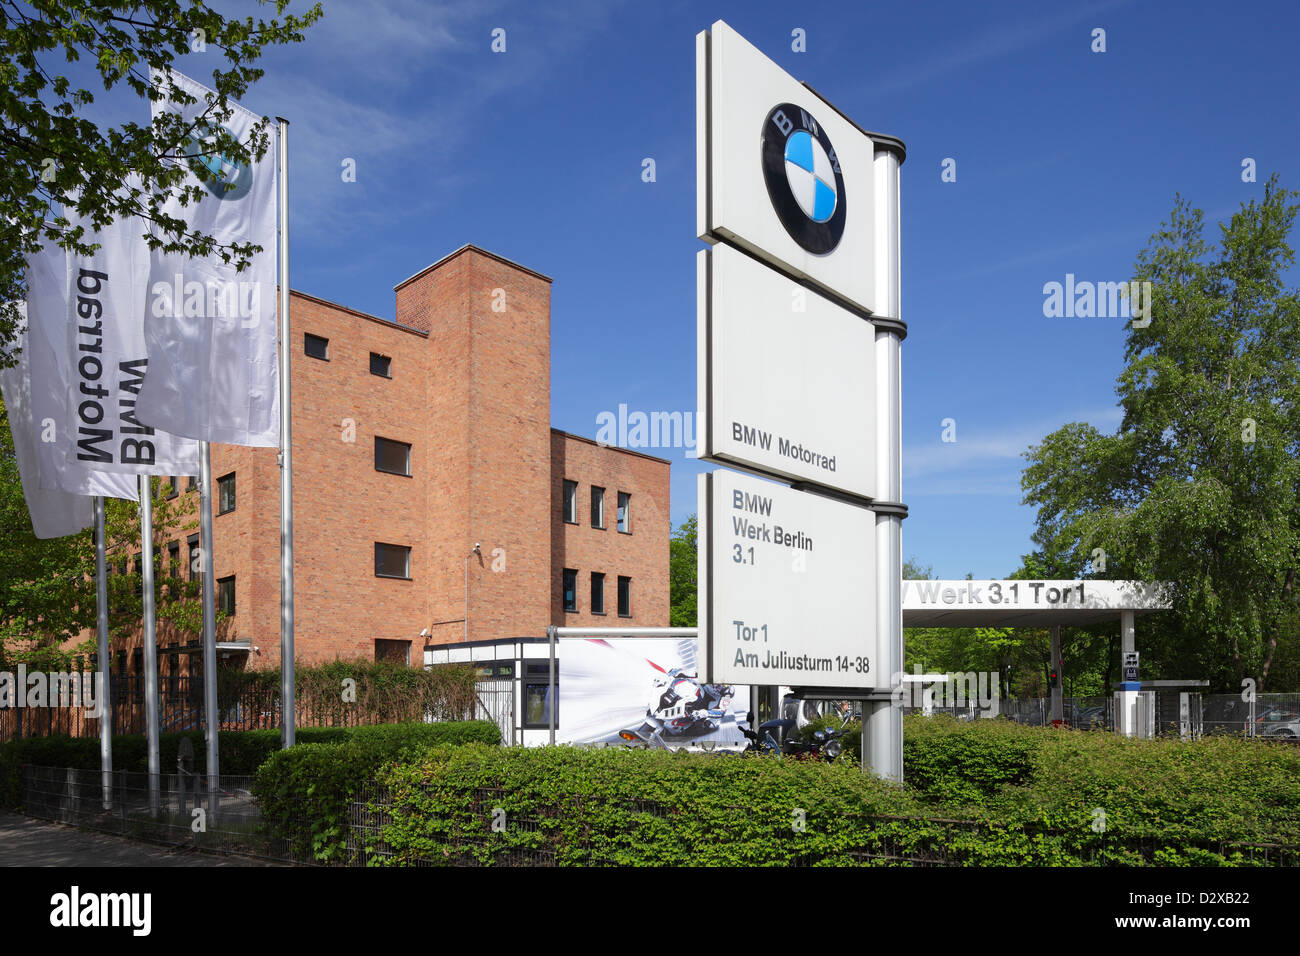 Berlin, Germany, BMW Motorrad plant in Spandau Am Juliusturm Stock Photo -  Alamy